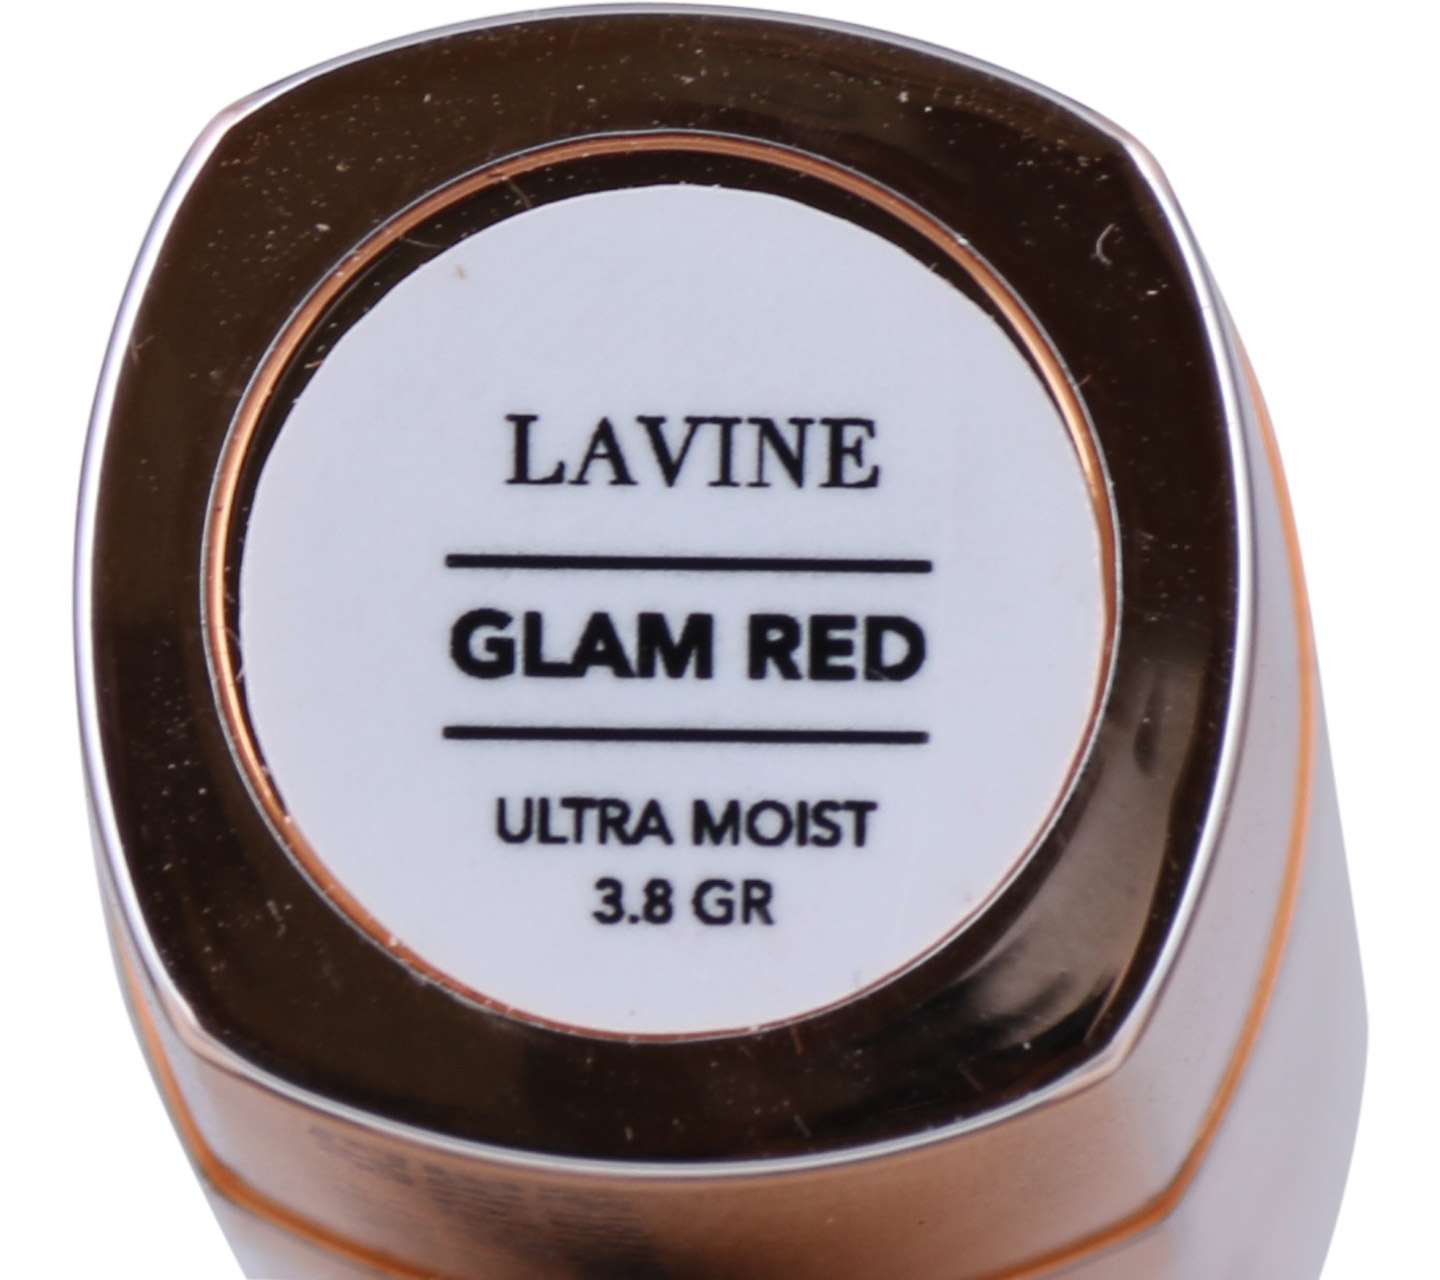 Lavine Glam Red Lips